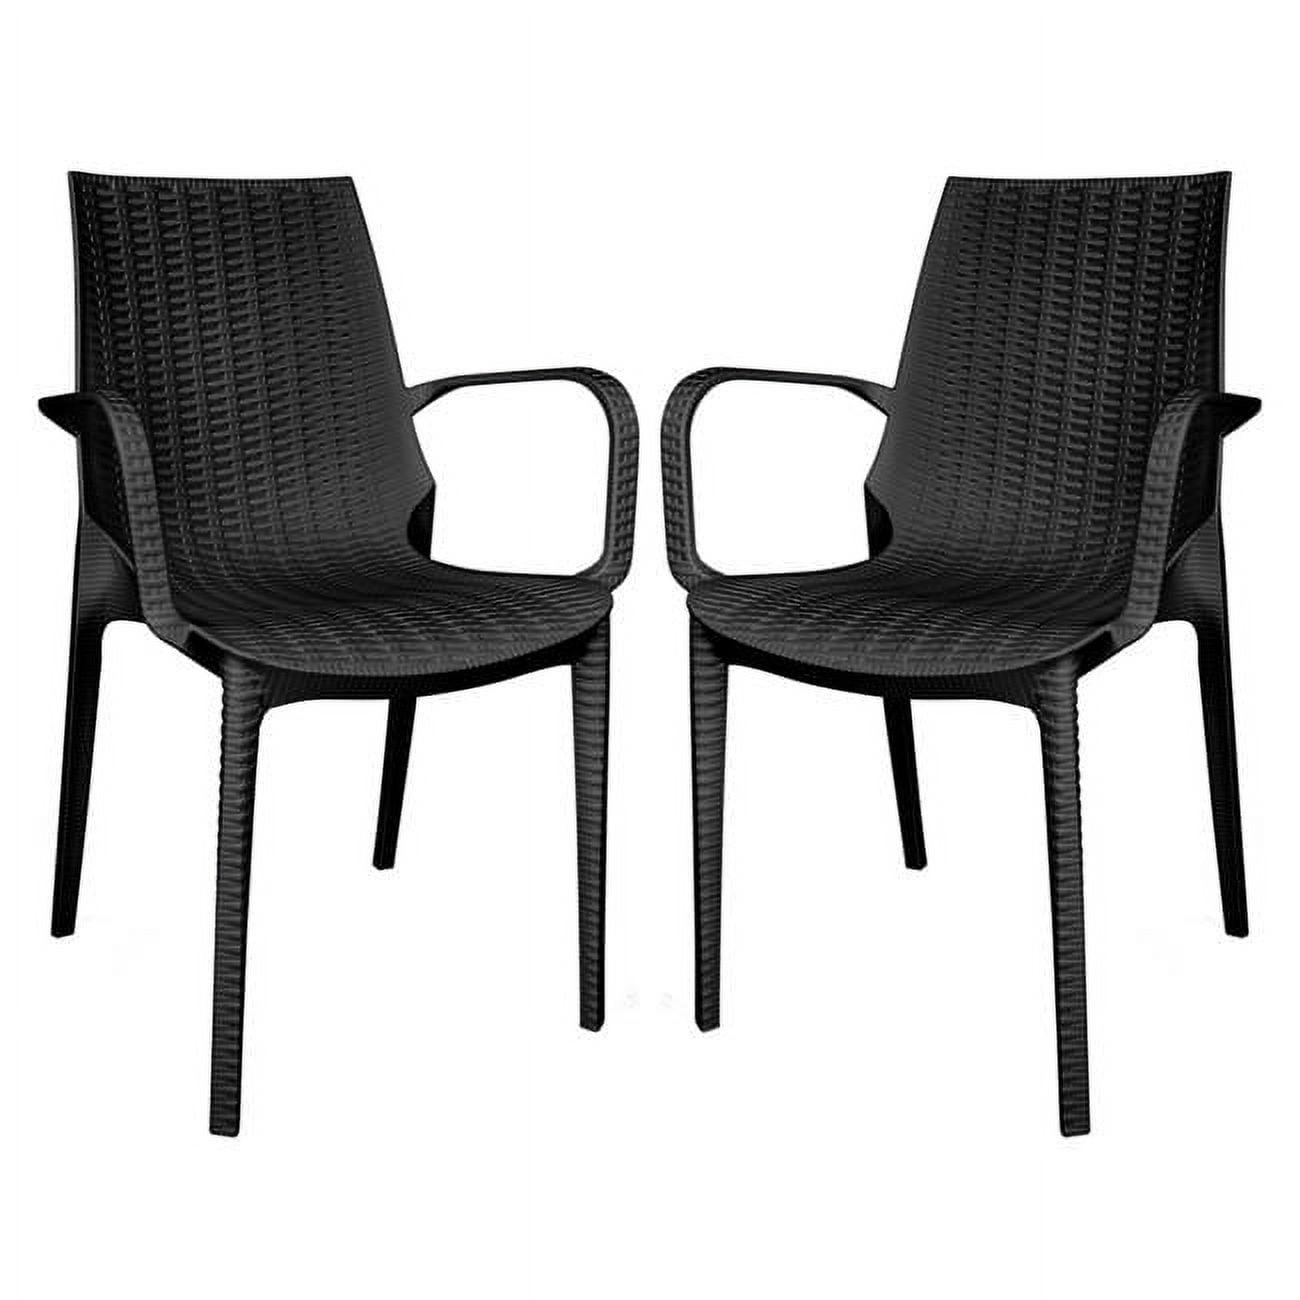 Kent 35'' Black Weave Design Polypropylene Outdoor Dining Chair - Set of 2